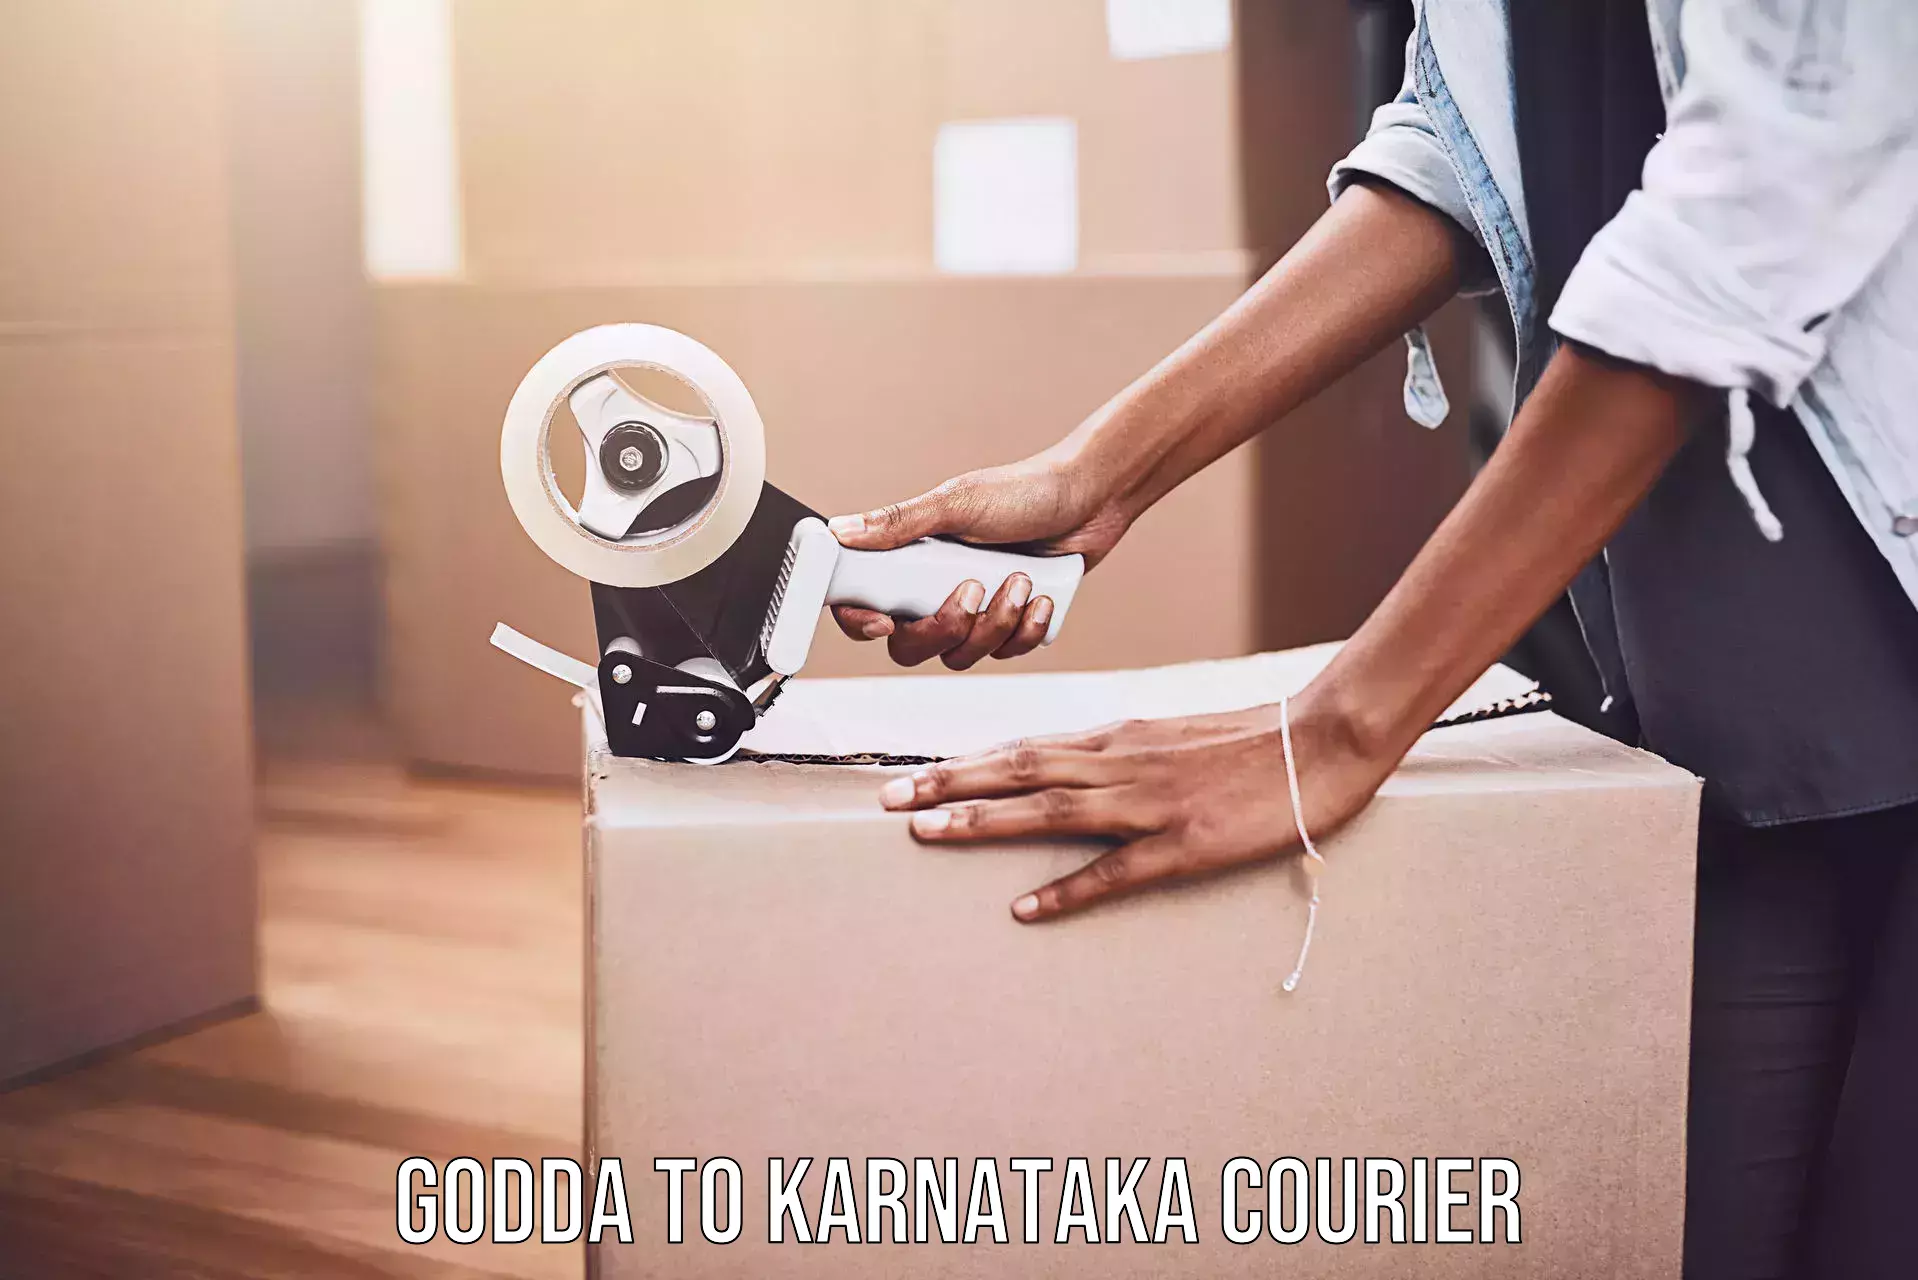 Global logistics network Godda to Karnataka